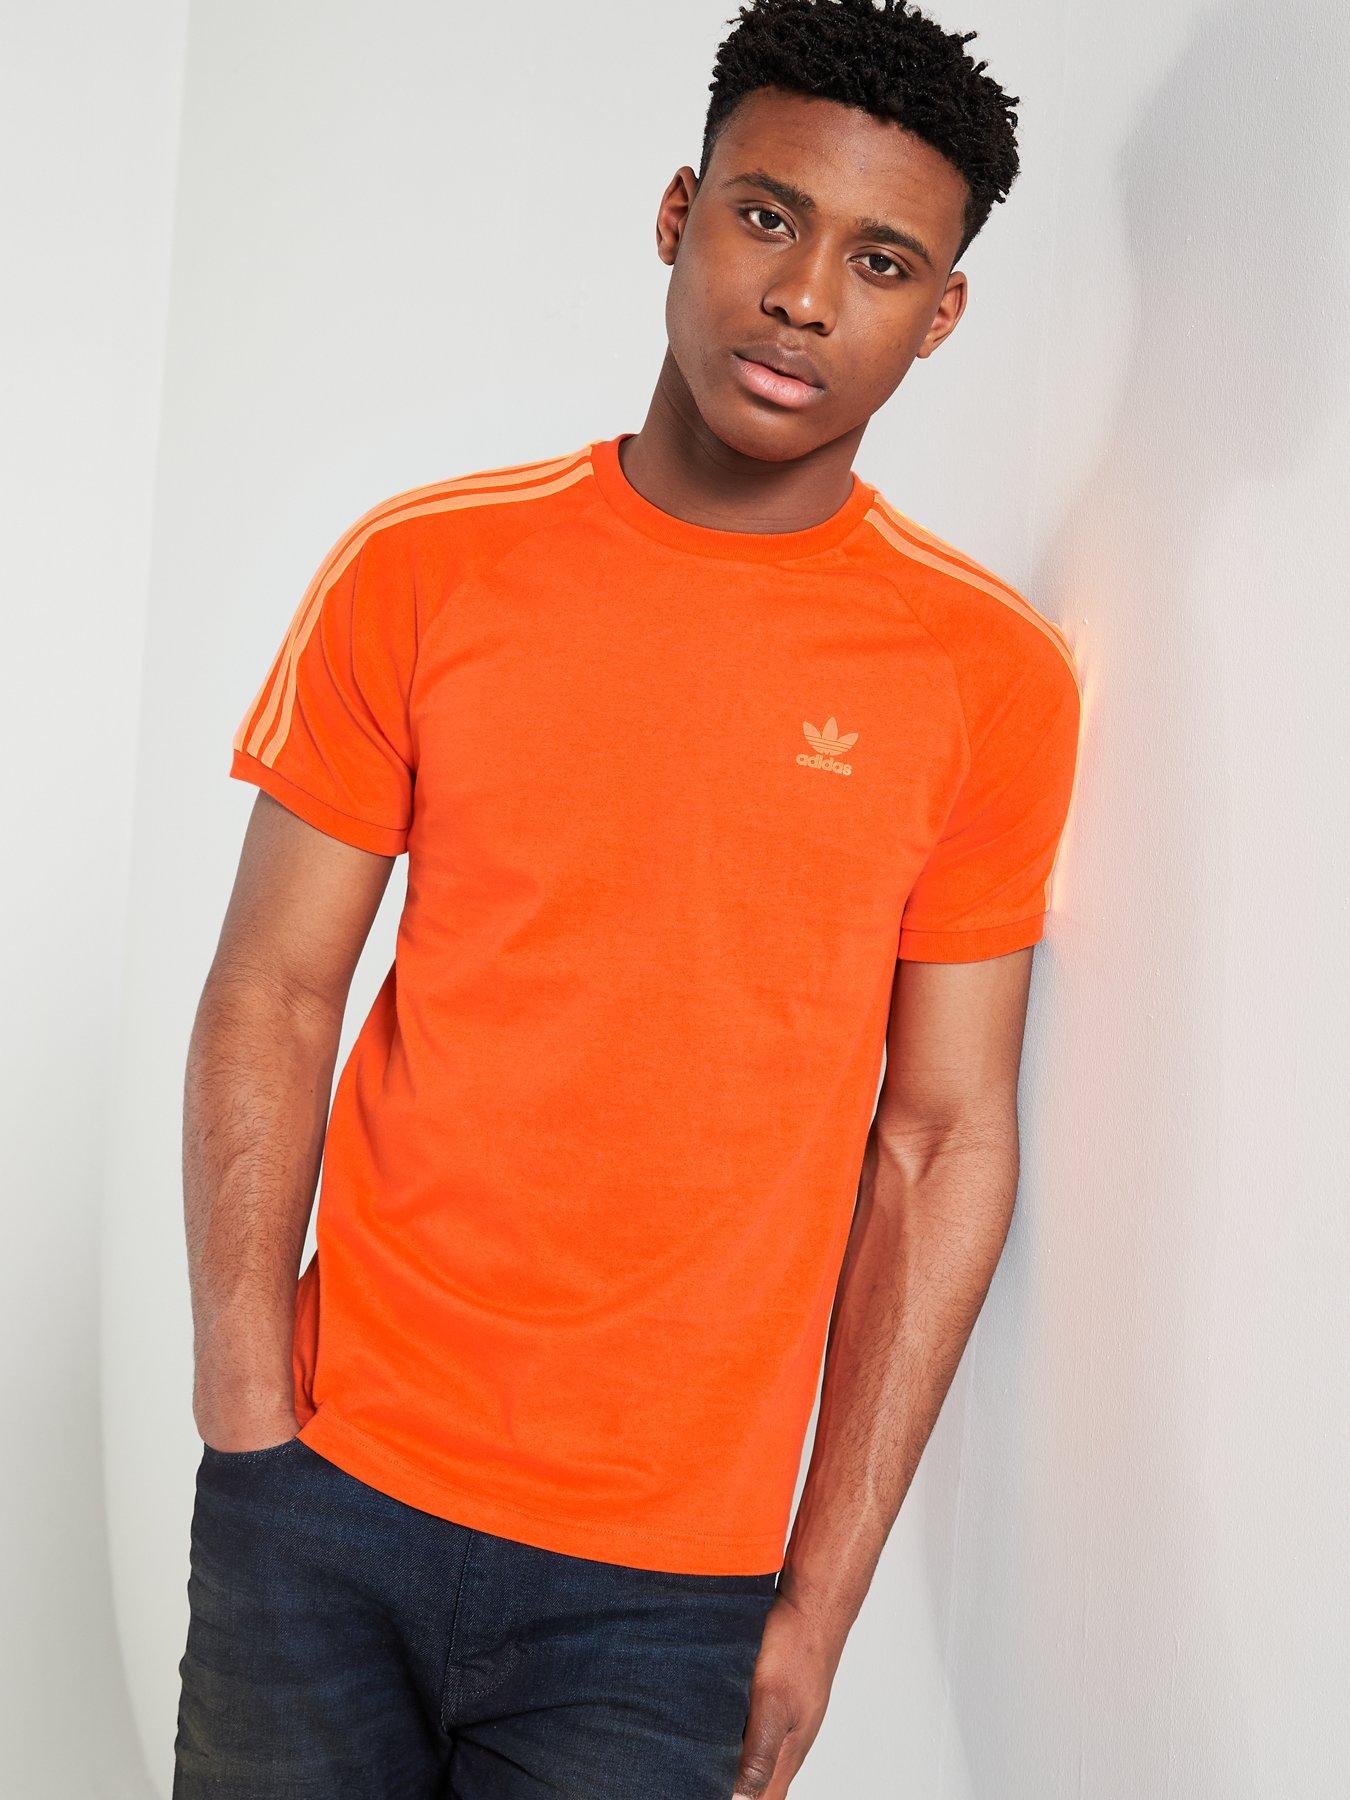 adidas t shirt orange